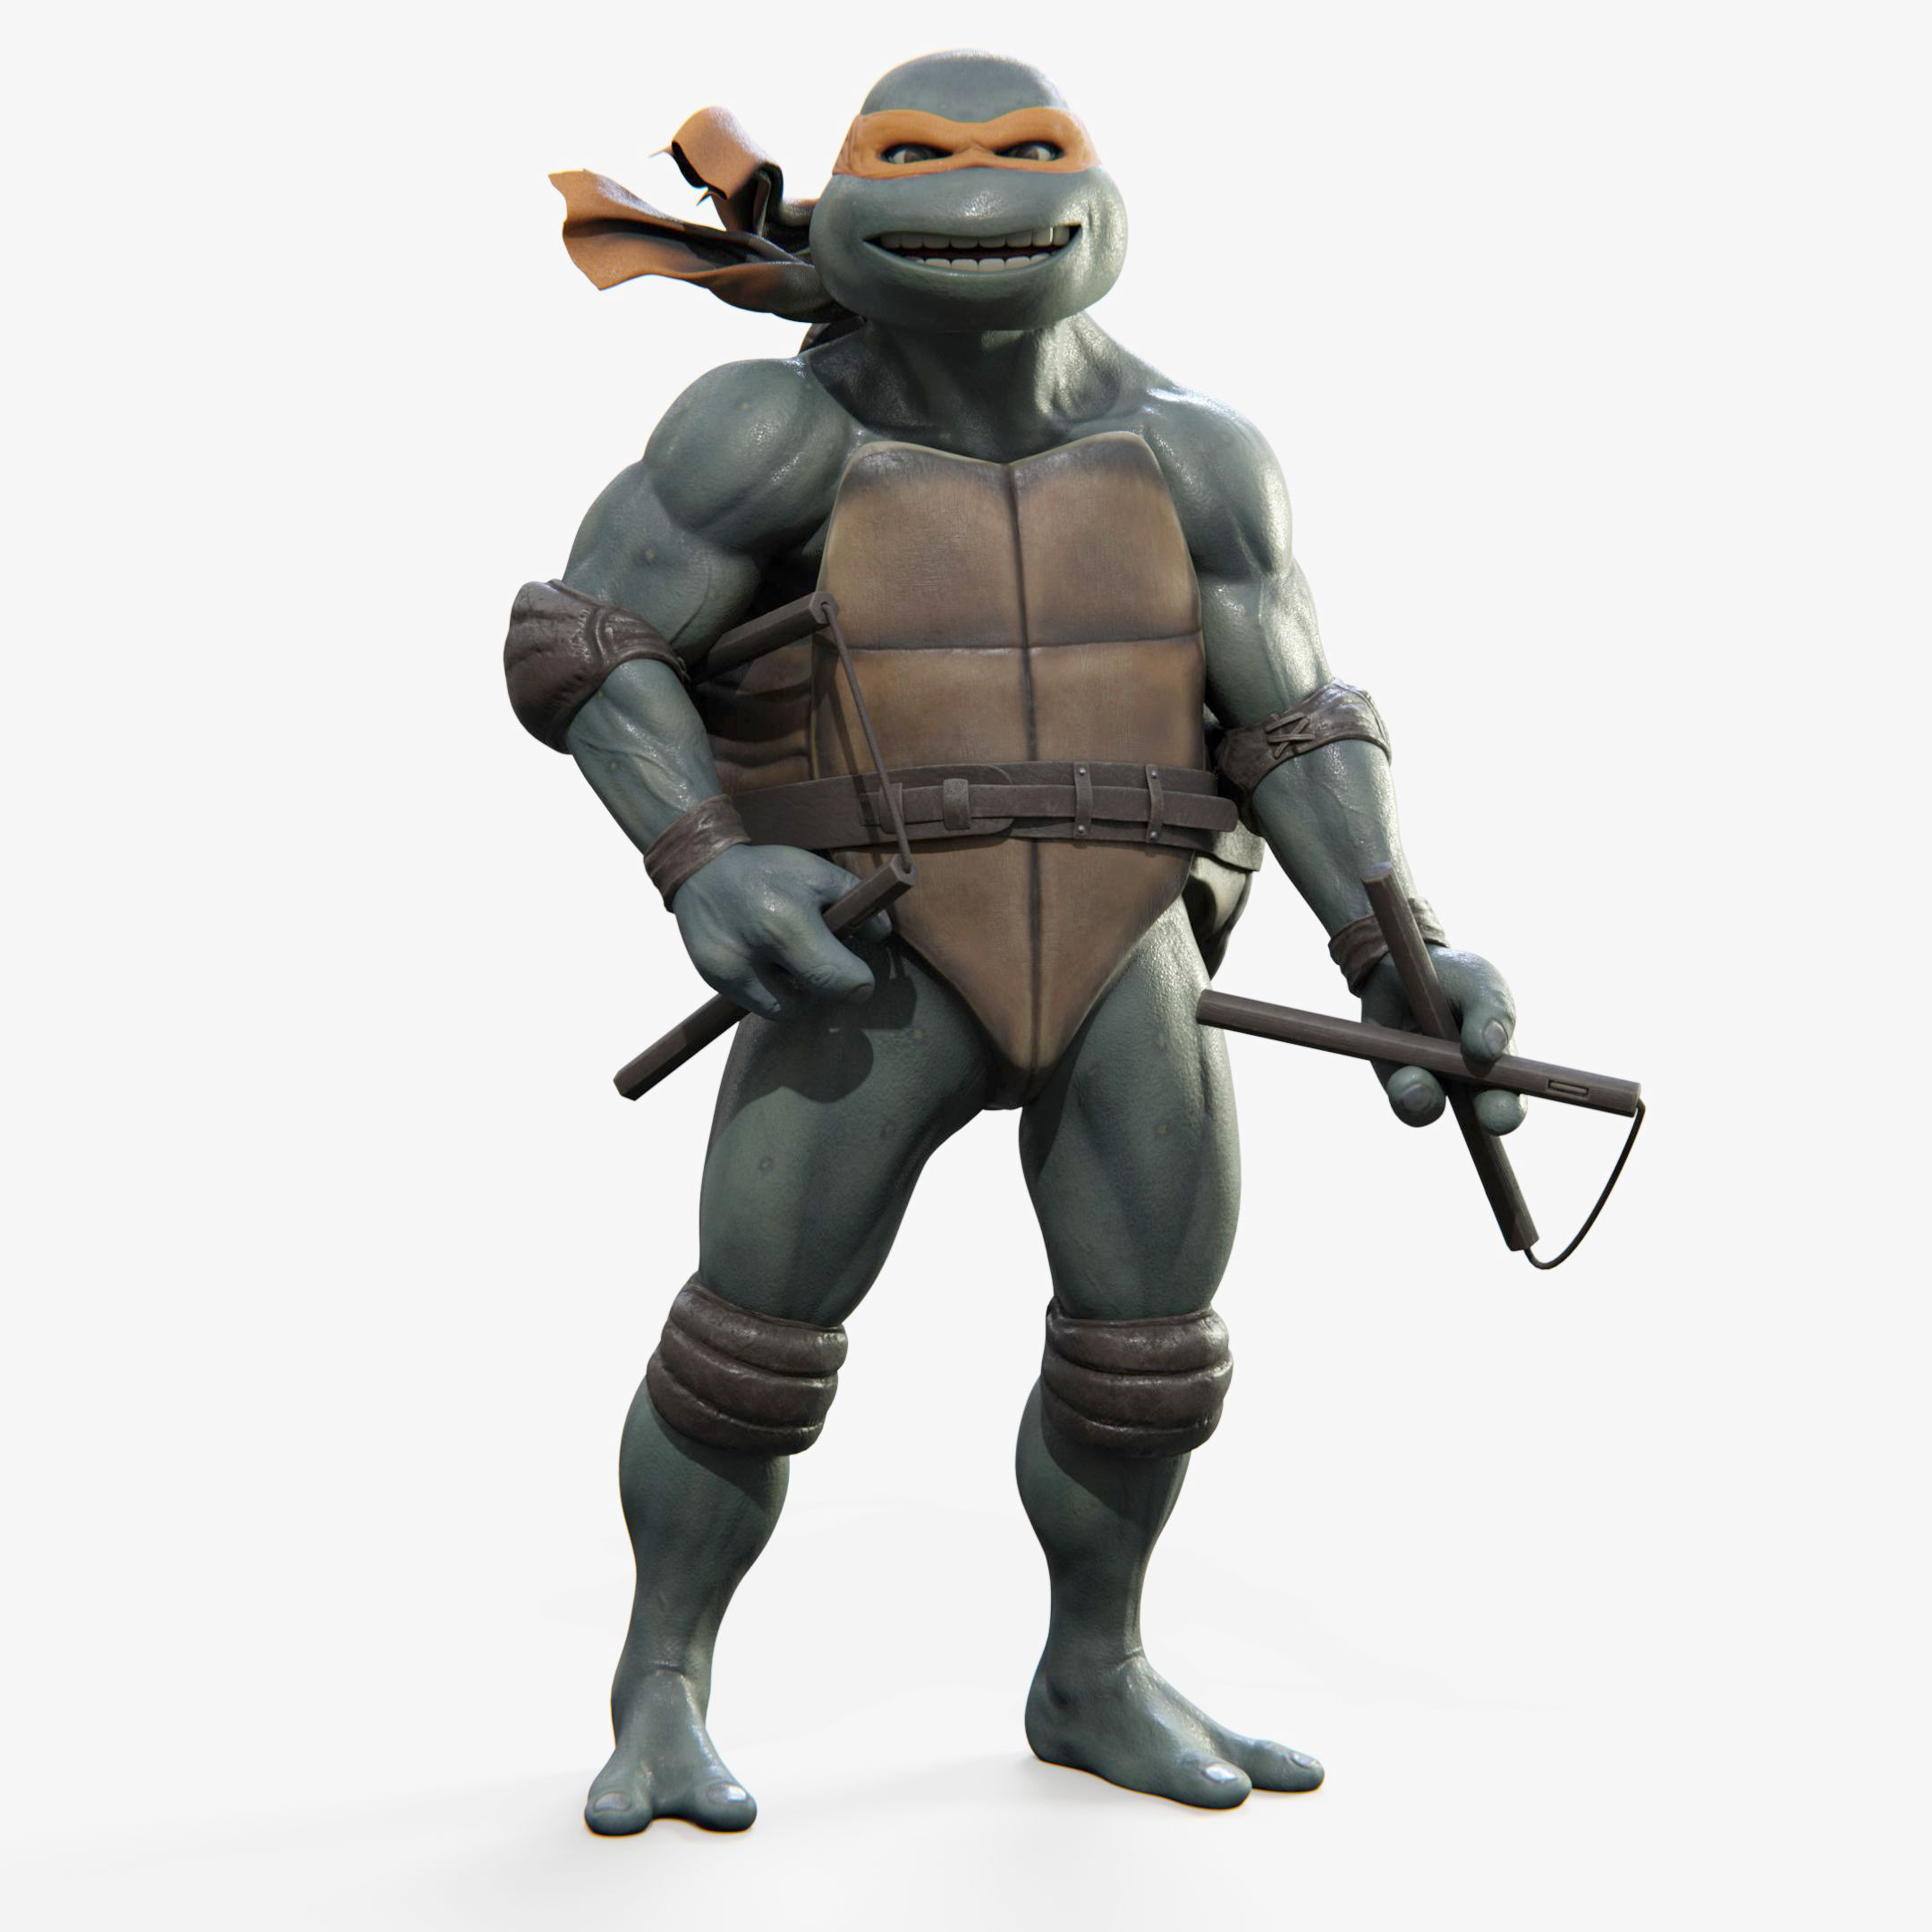 Michelangelo Teenage Mutant Ninja Turtle Image